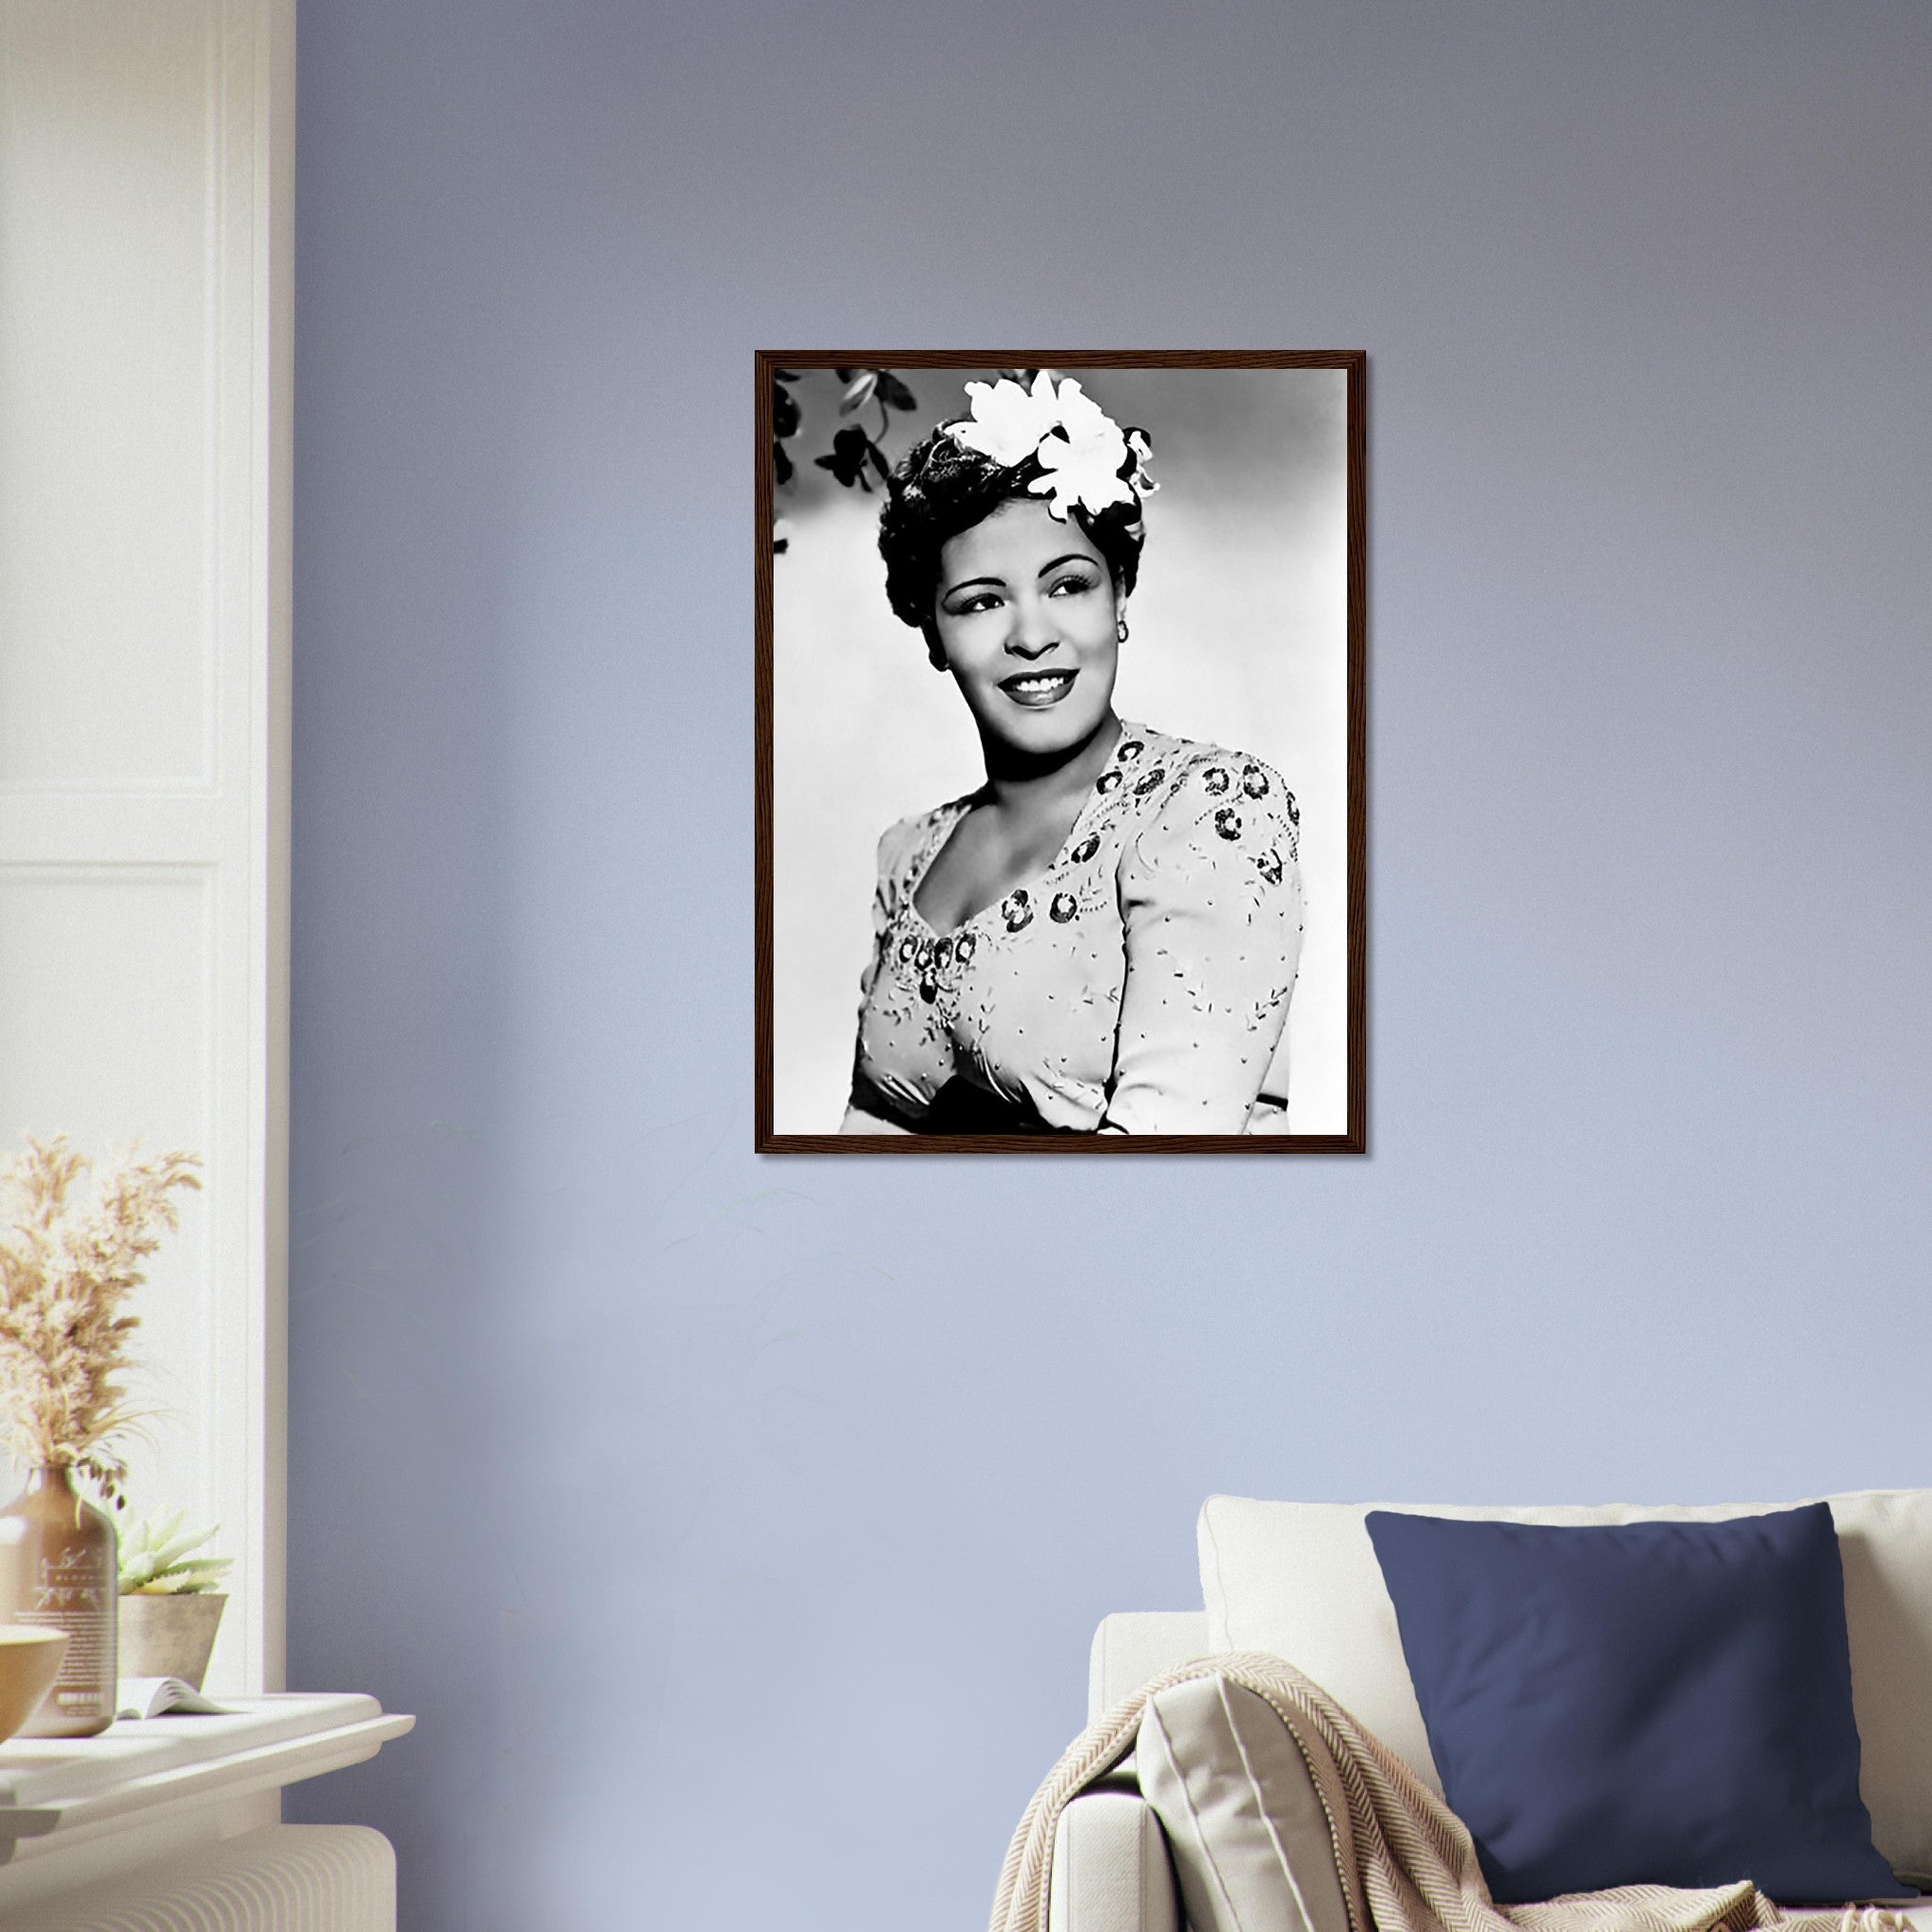 Billie Holiday Framed, Lady Day Soul Singer, Vintage Billie Holiday Framed Print - Legend Of Soul Music UK, EU USA Domestic Shipping - WallArtPrints4U